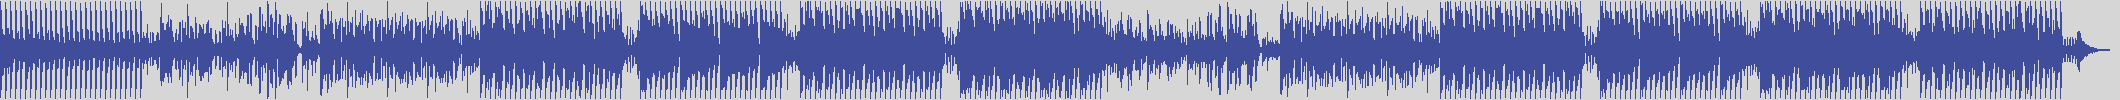 nf_boyz_records [NFY025] K Groove - Higher [Rhythms Mix] audio wave form